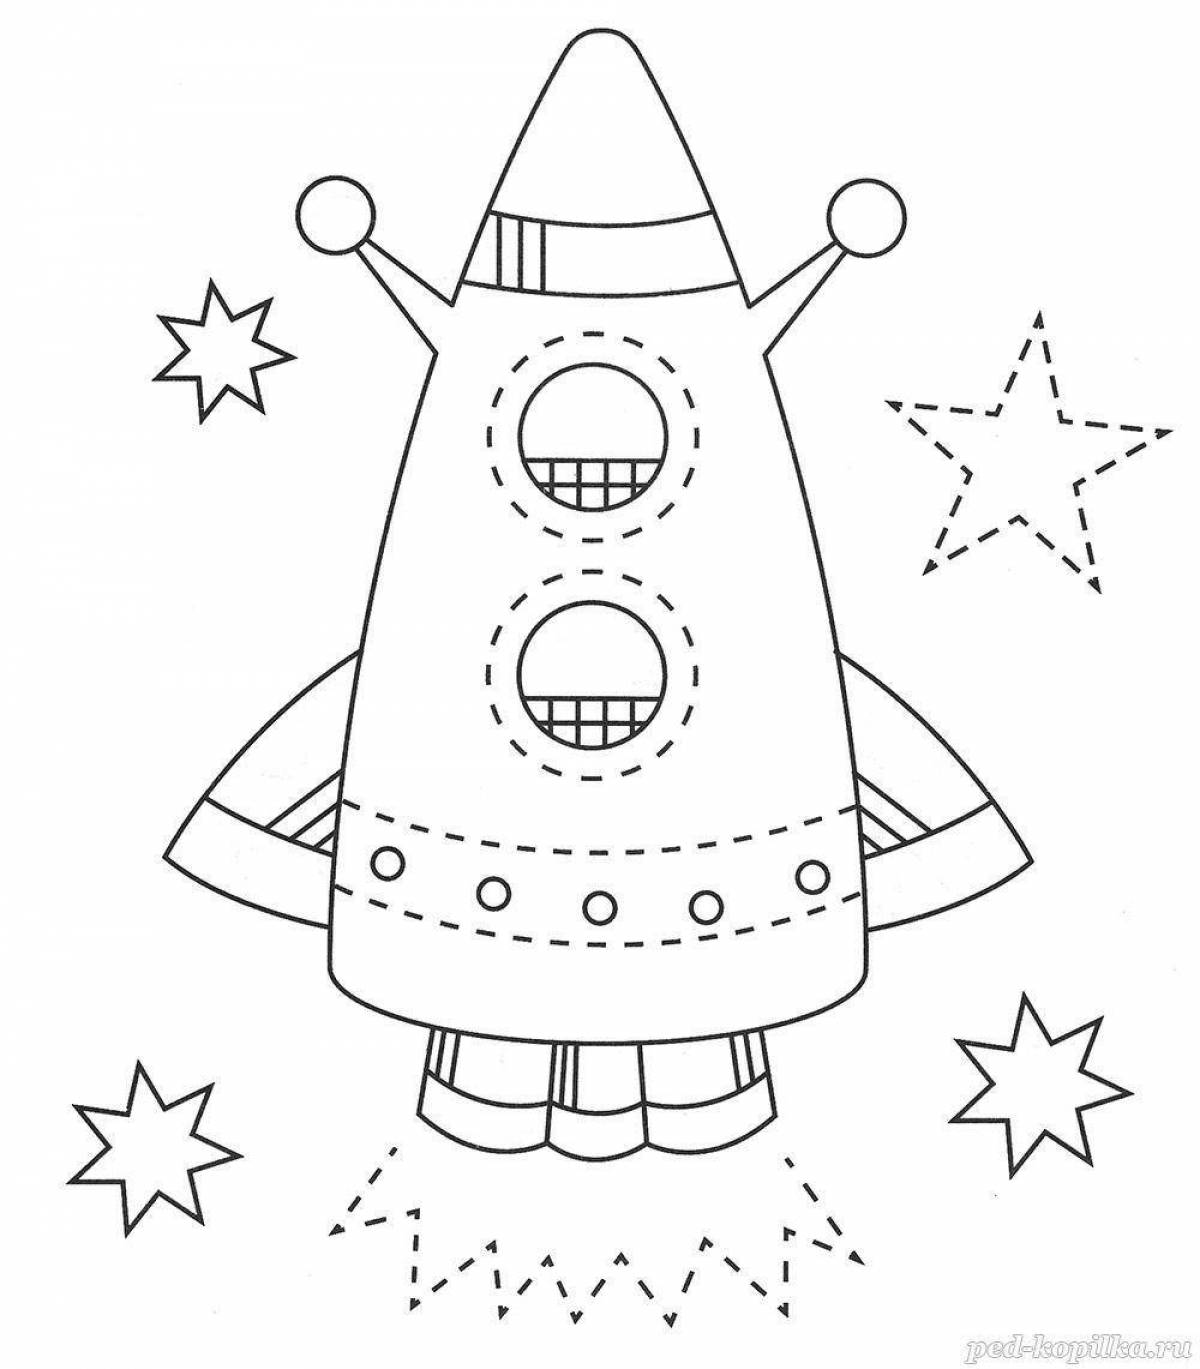 Раскраска lovely rocket для детей 6-7 лет